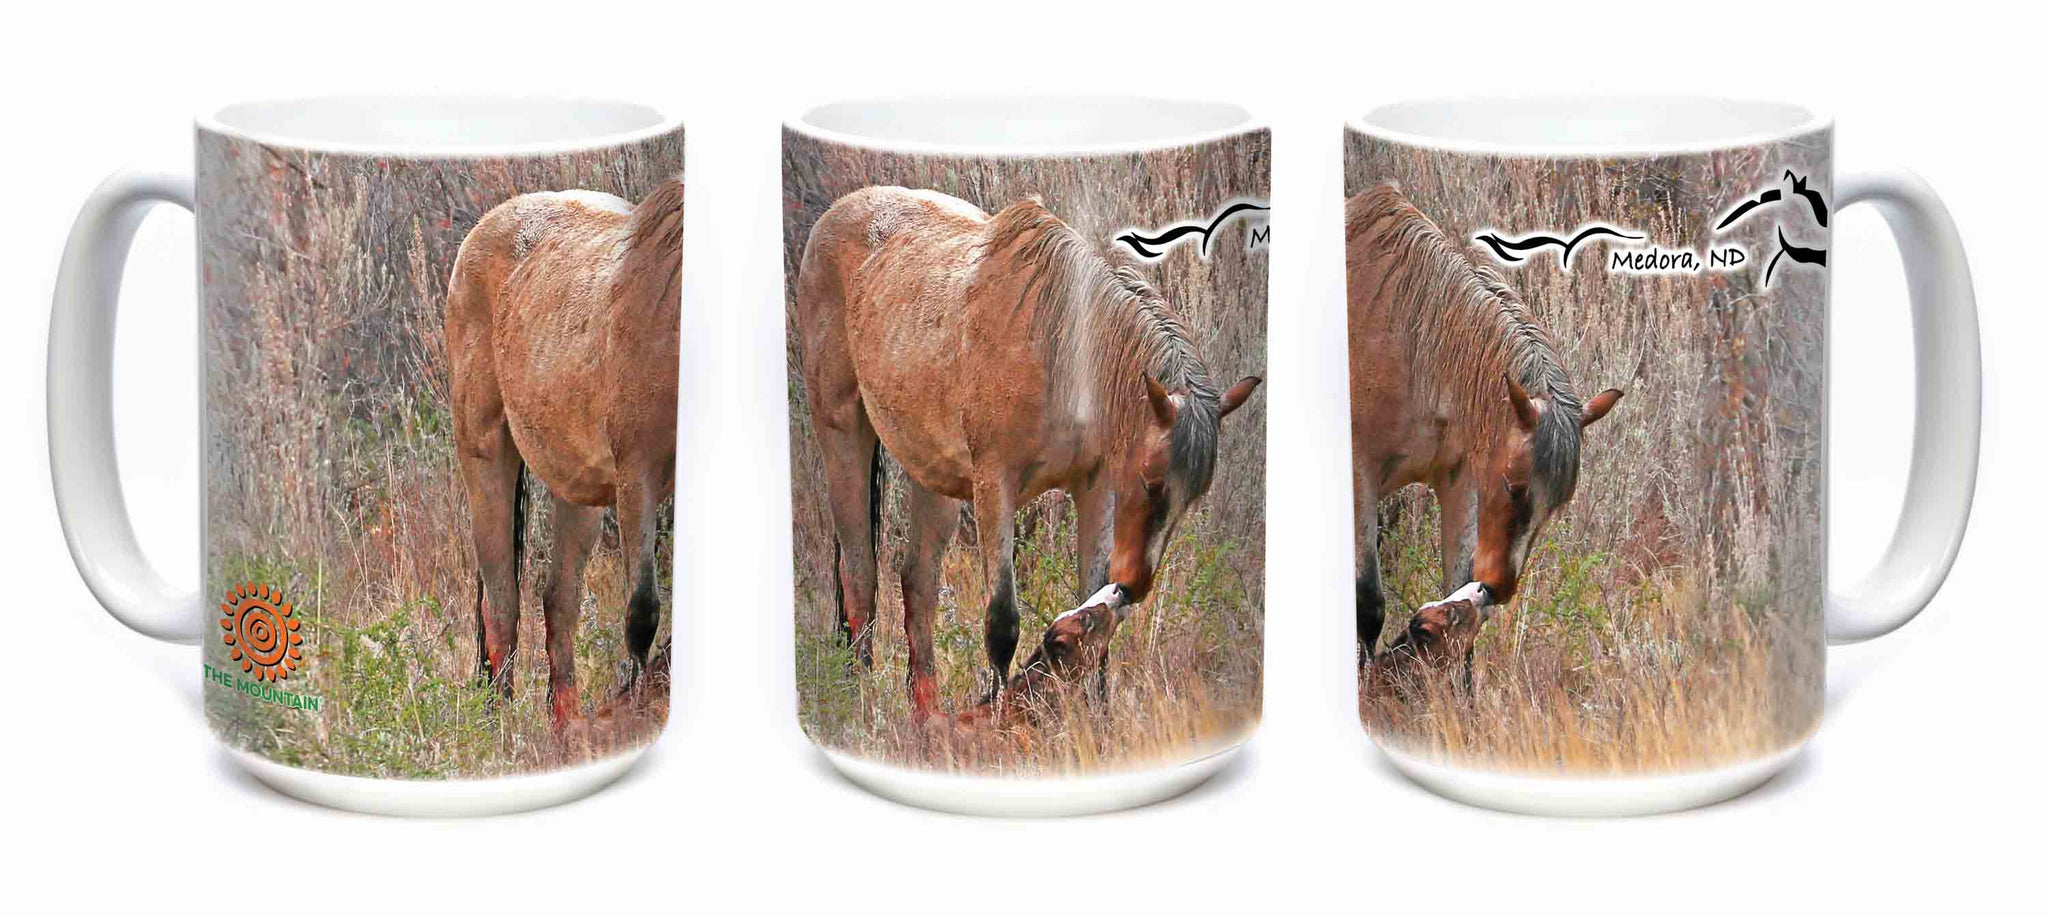 15 oz Coffee Mugs by The Mountain